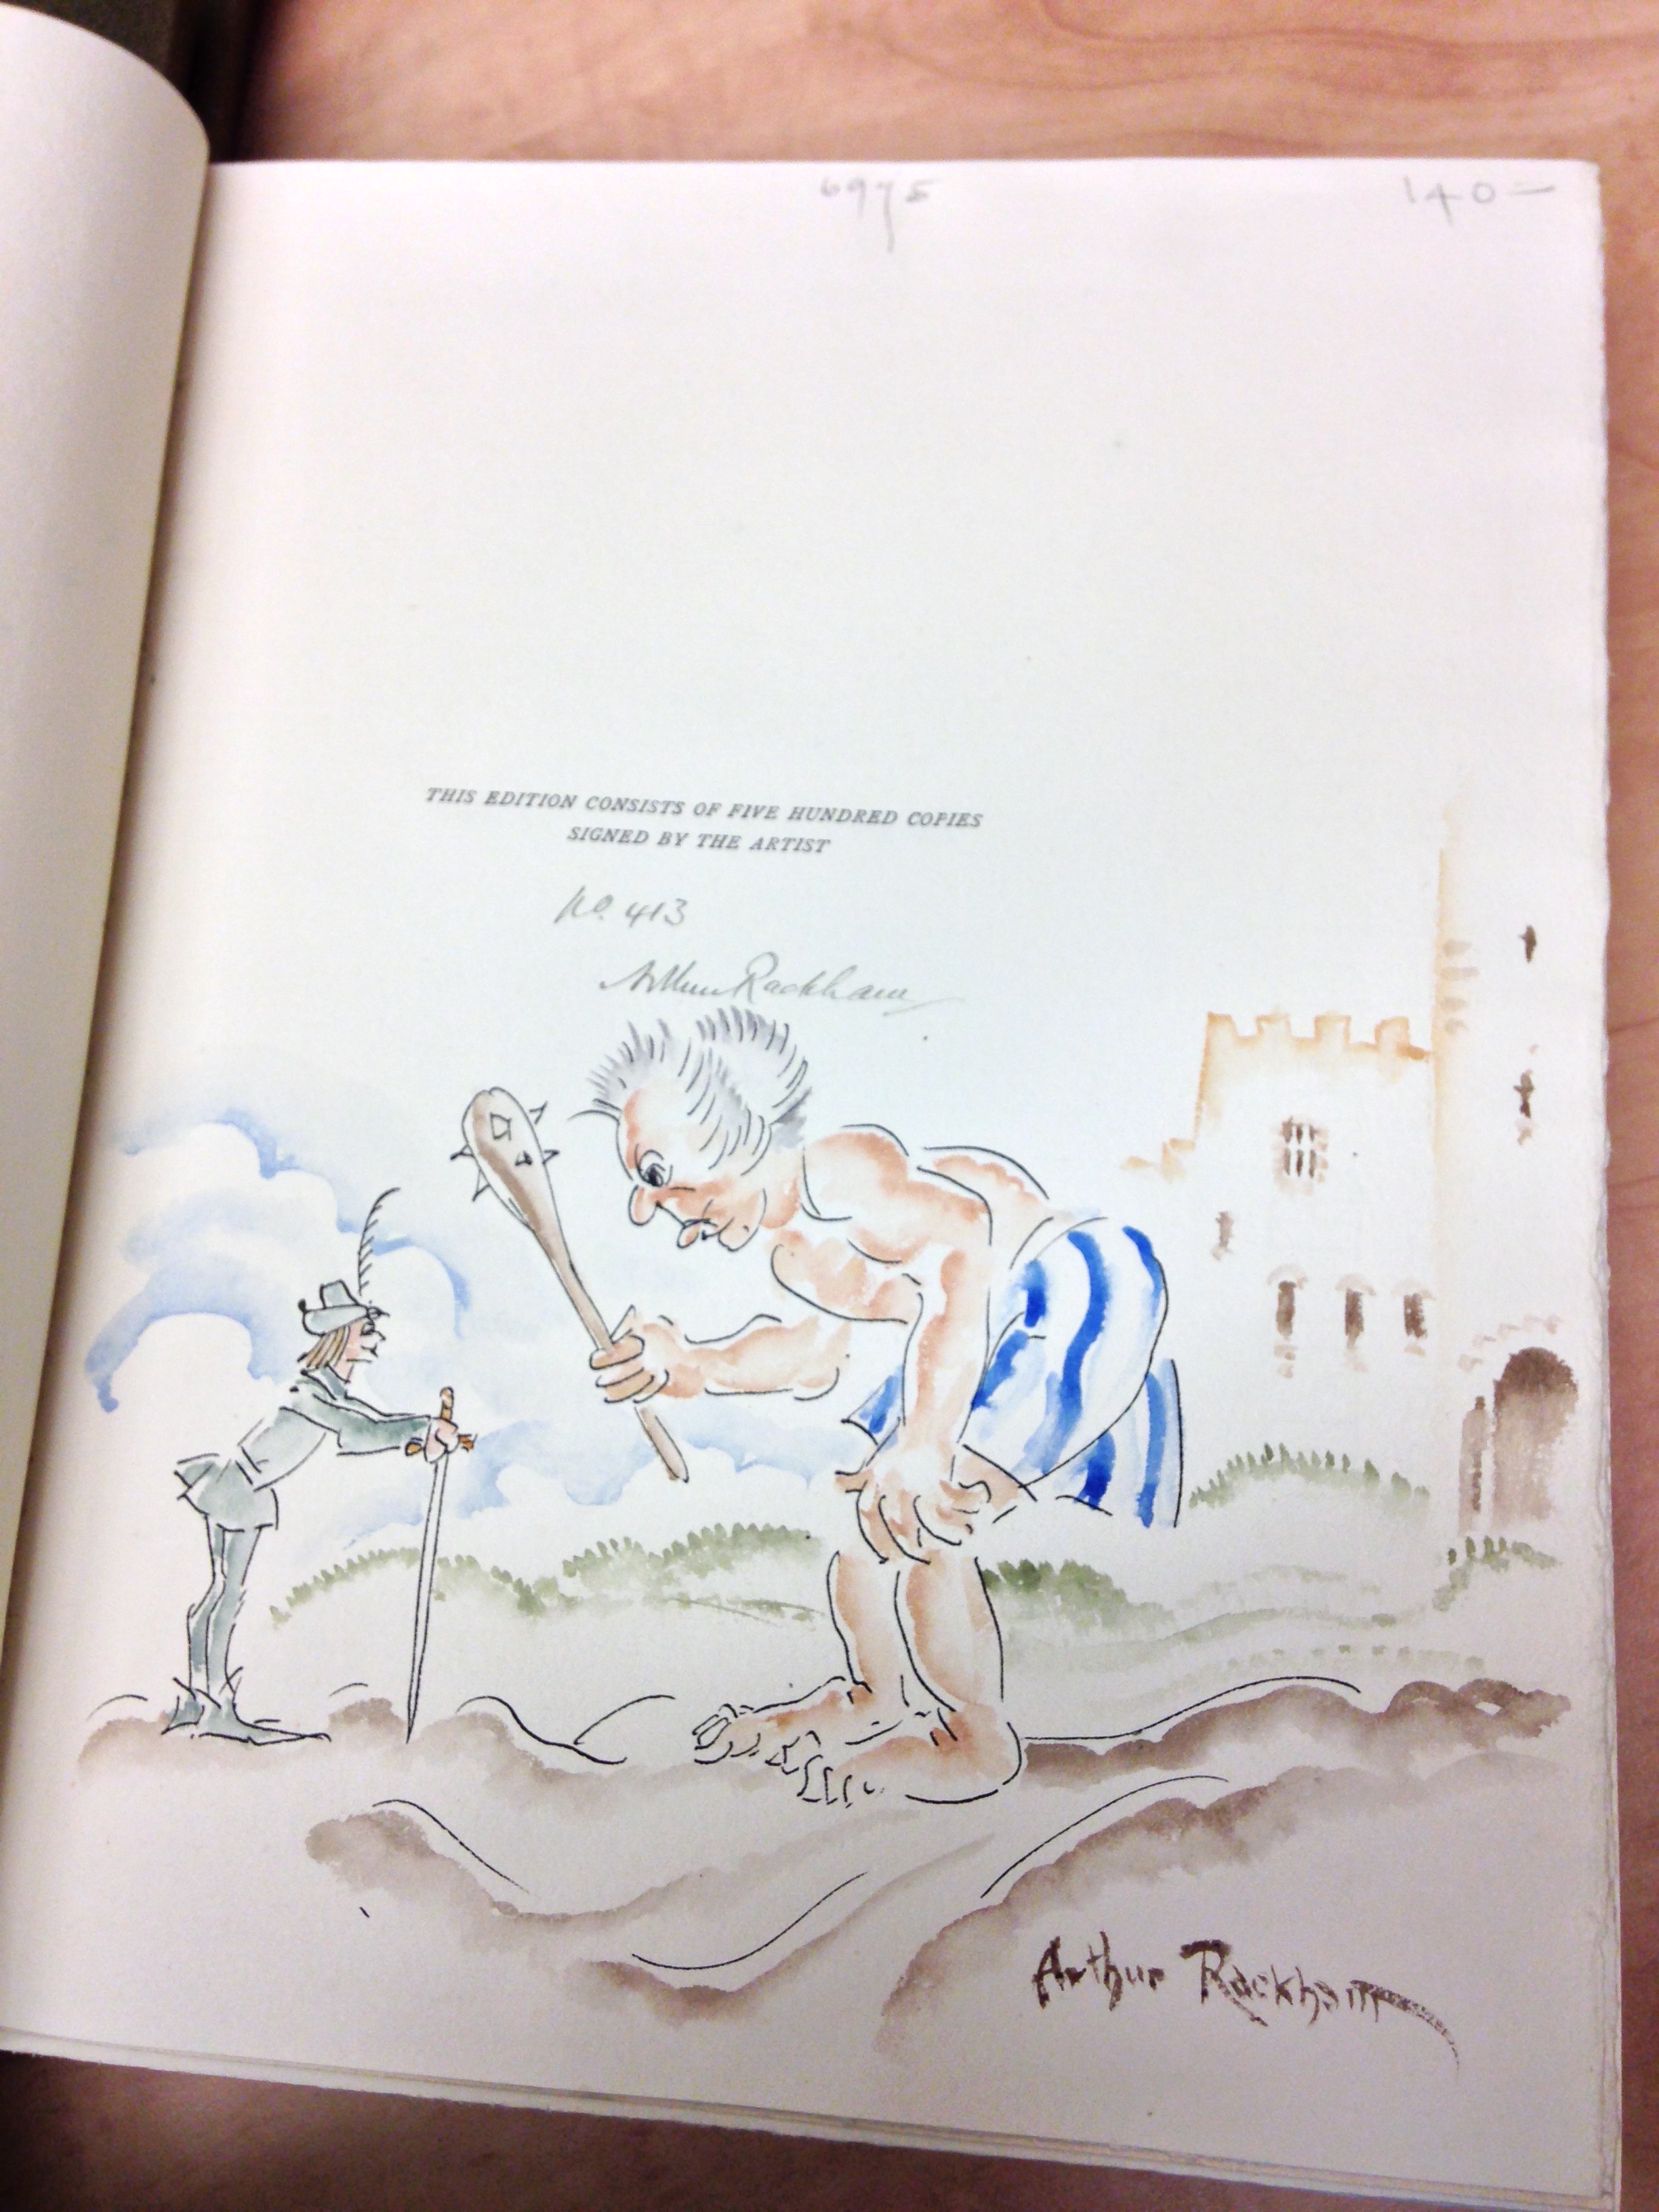 Jack and the Giant illustration by Rackham